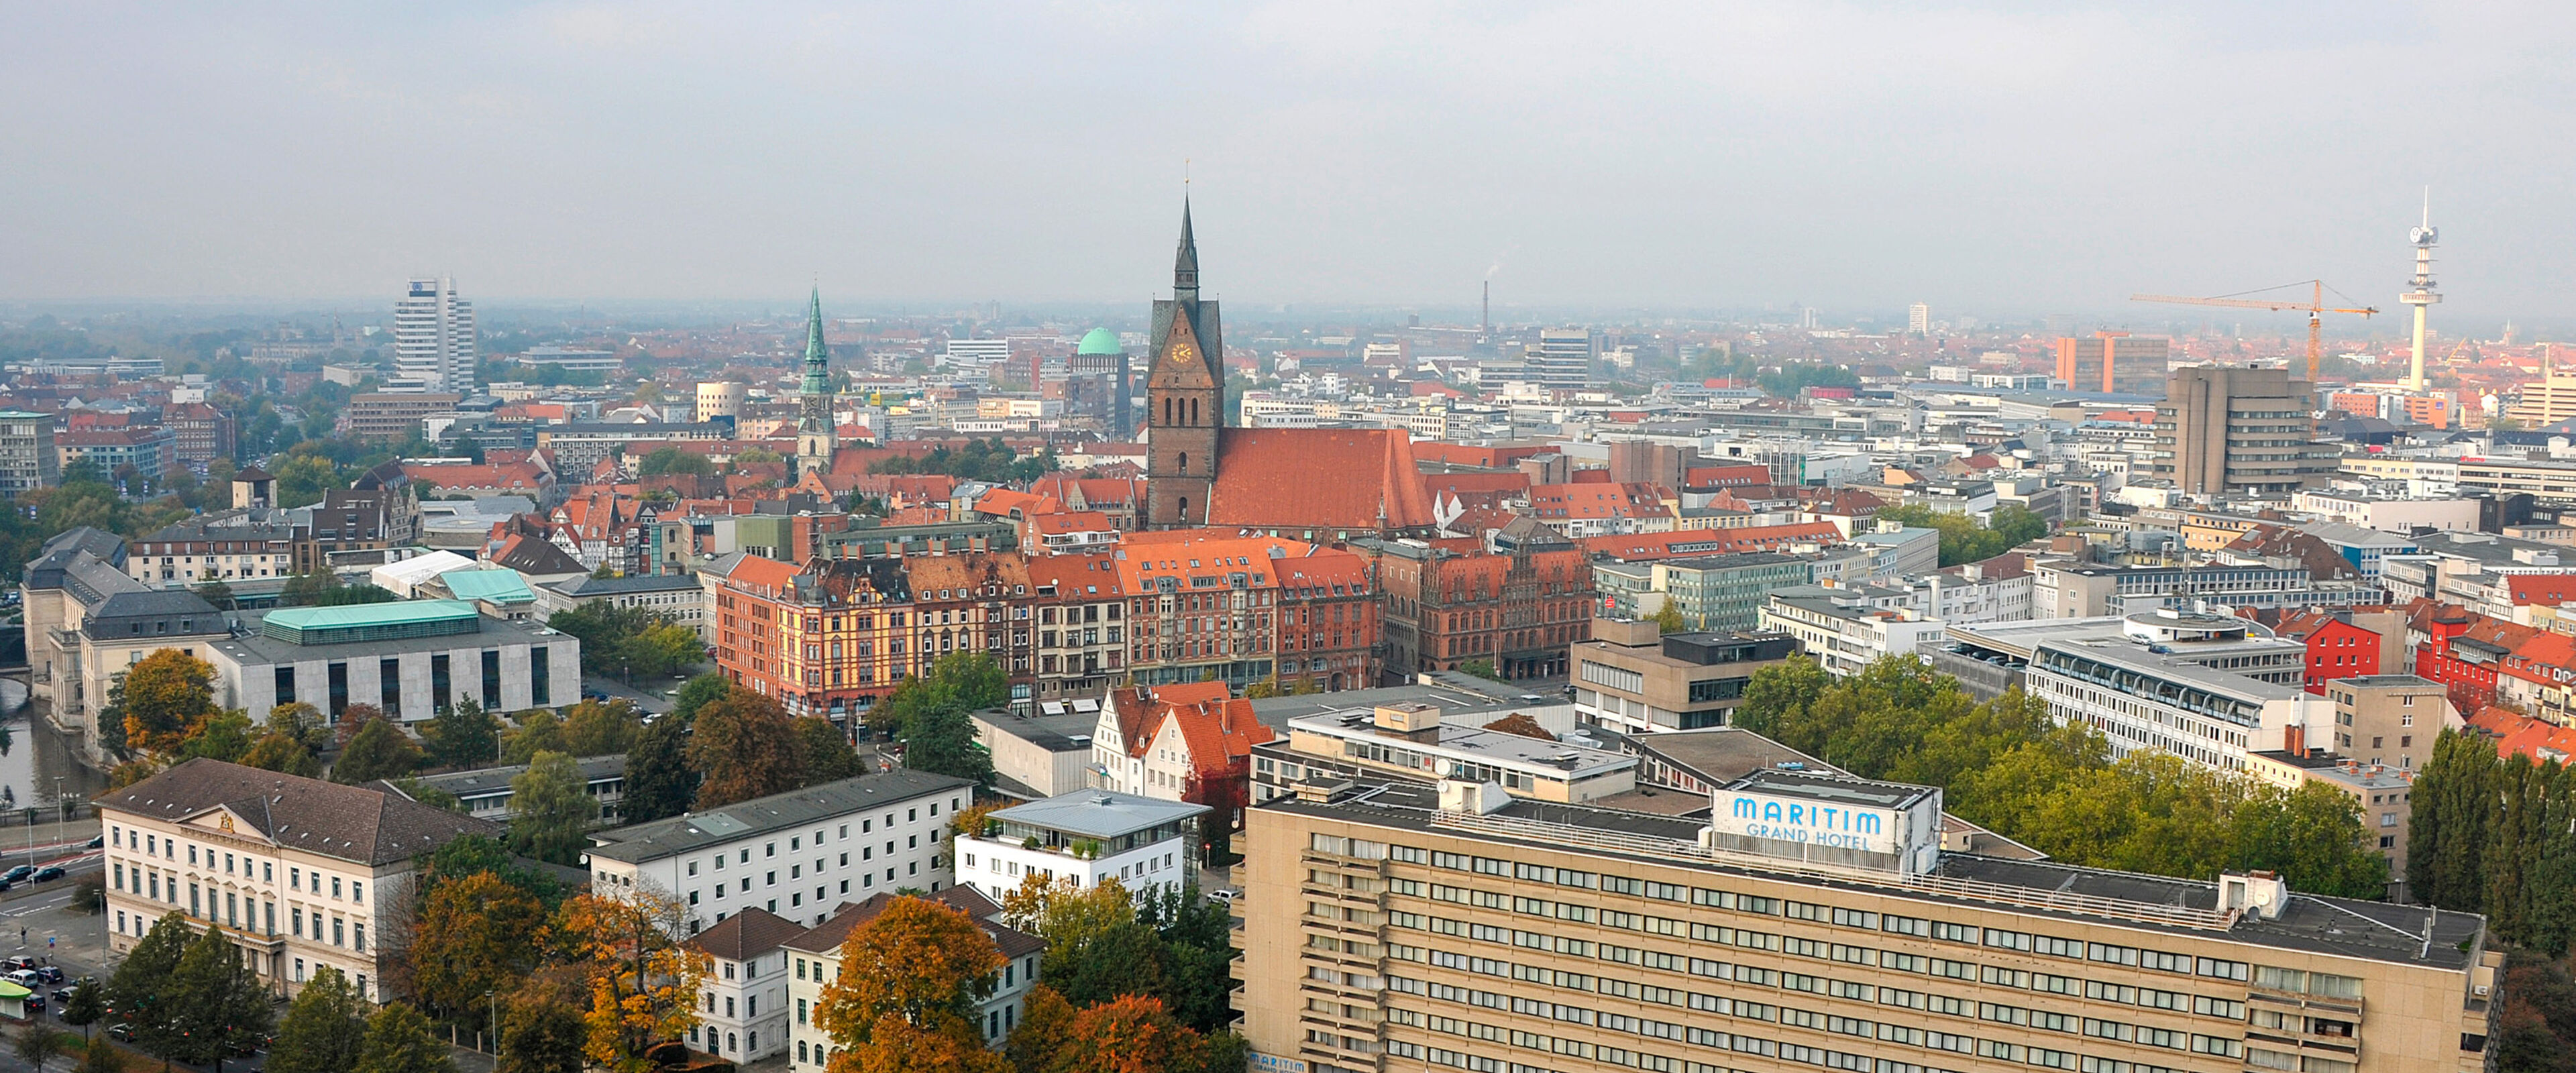 Silouette Stadt Hannover mit Marktkirche